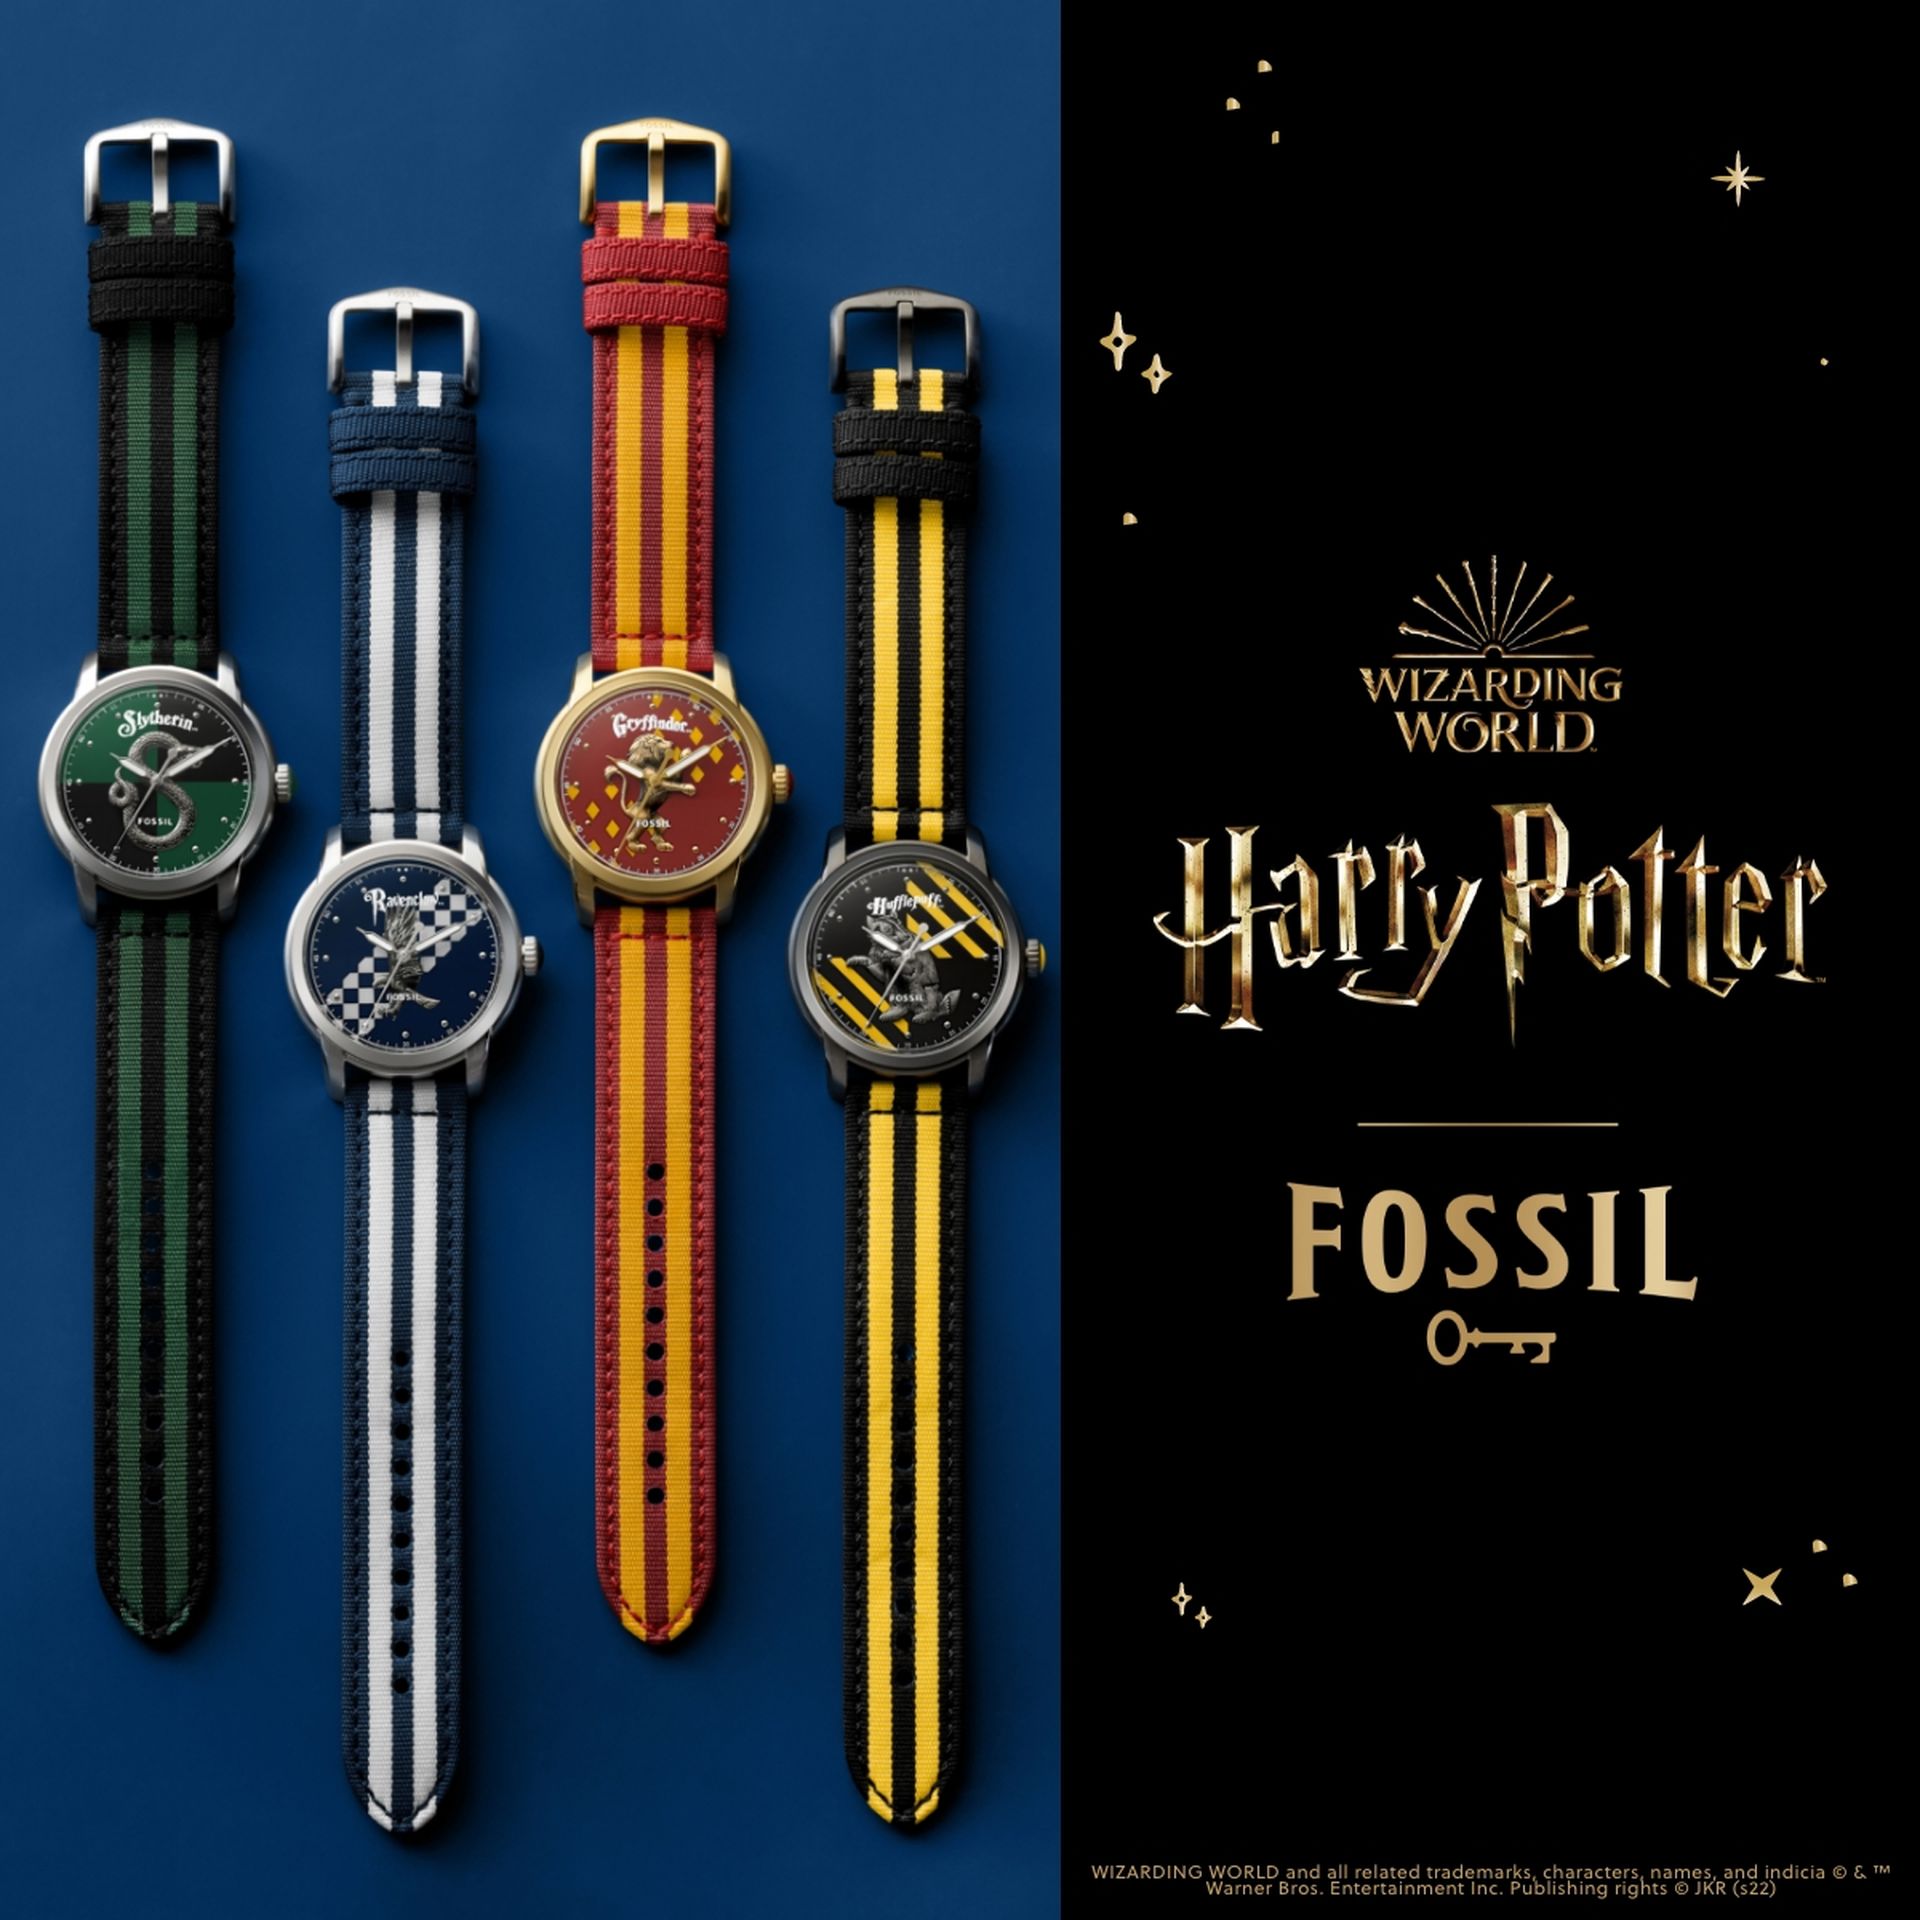 Fossil Wizarding World of Harry Potter koleksiyonu Saat&Saat'te